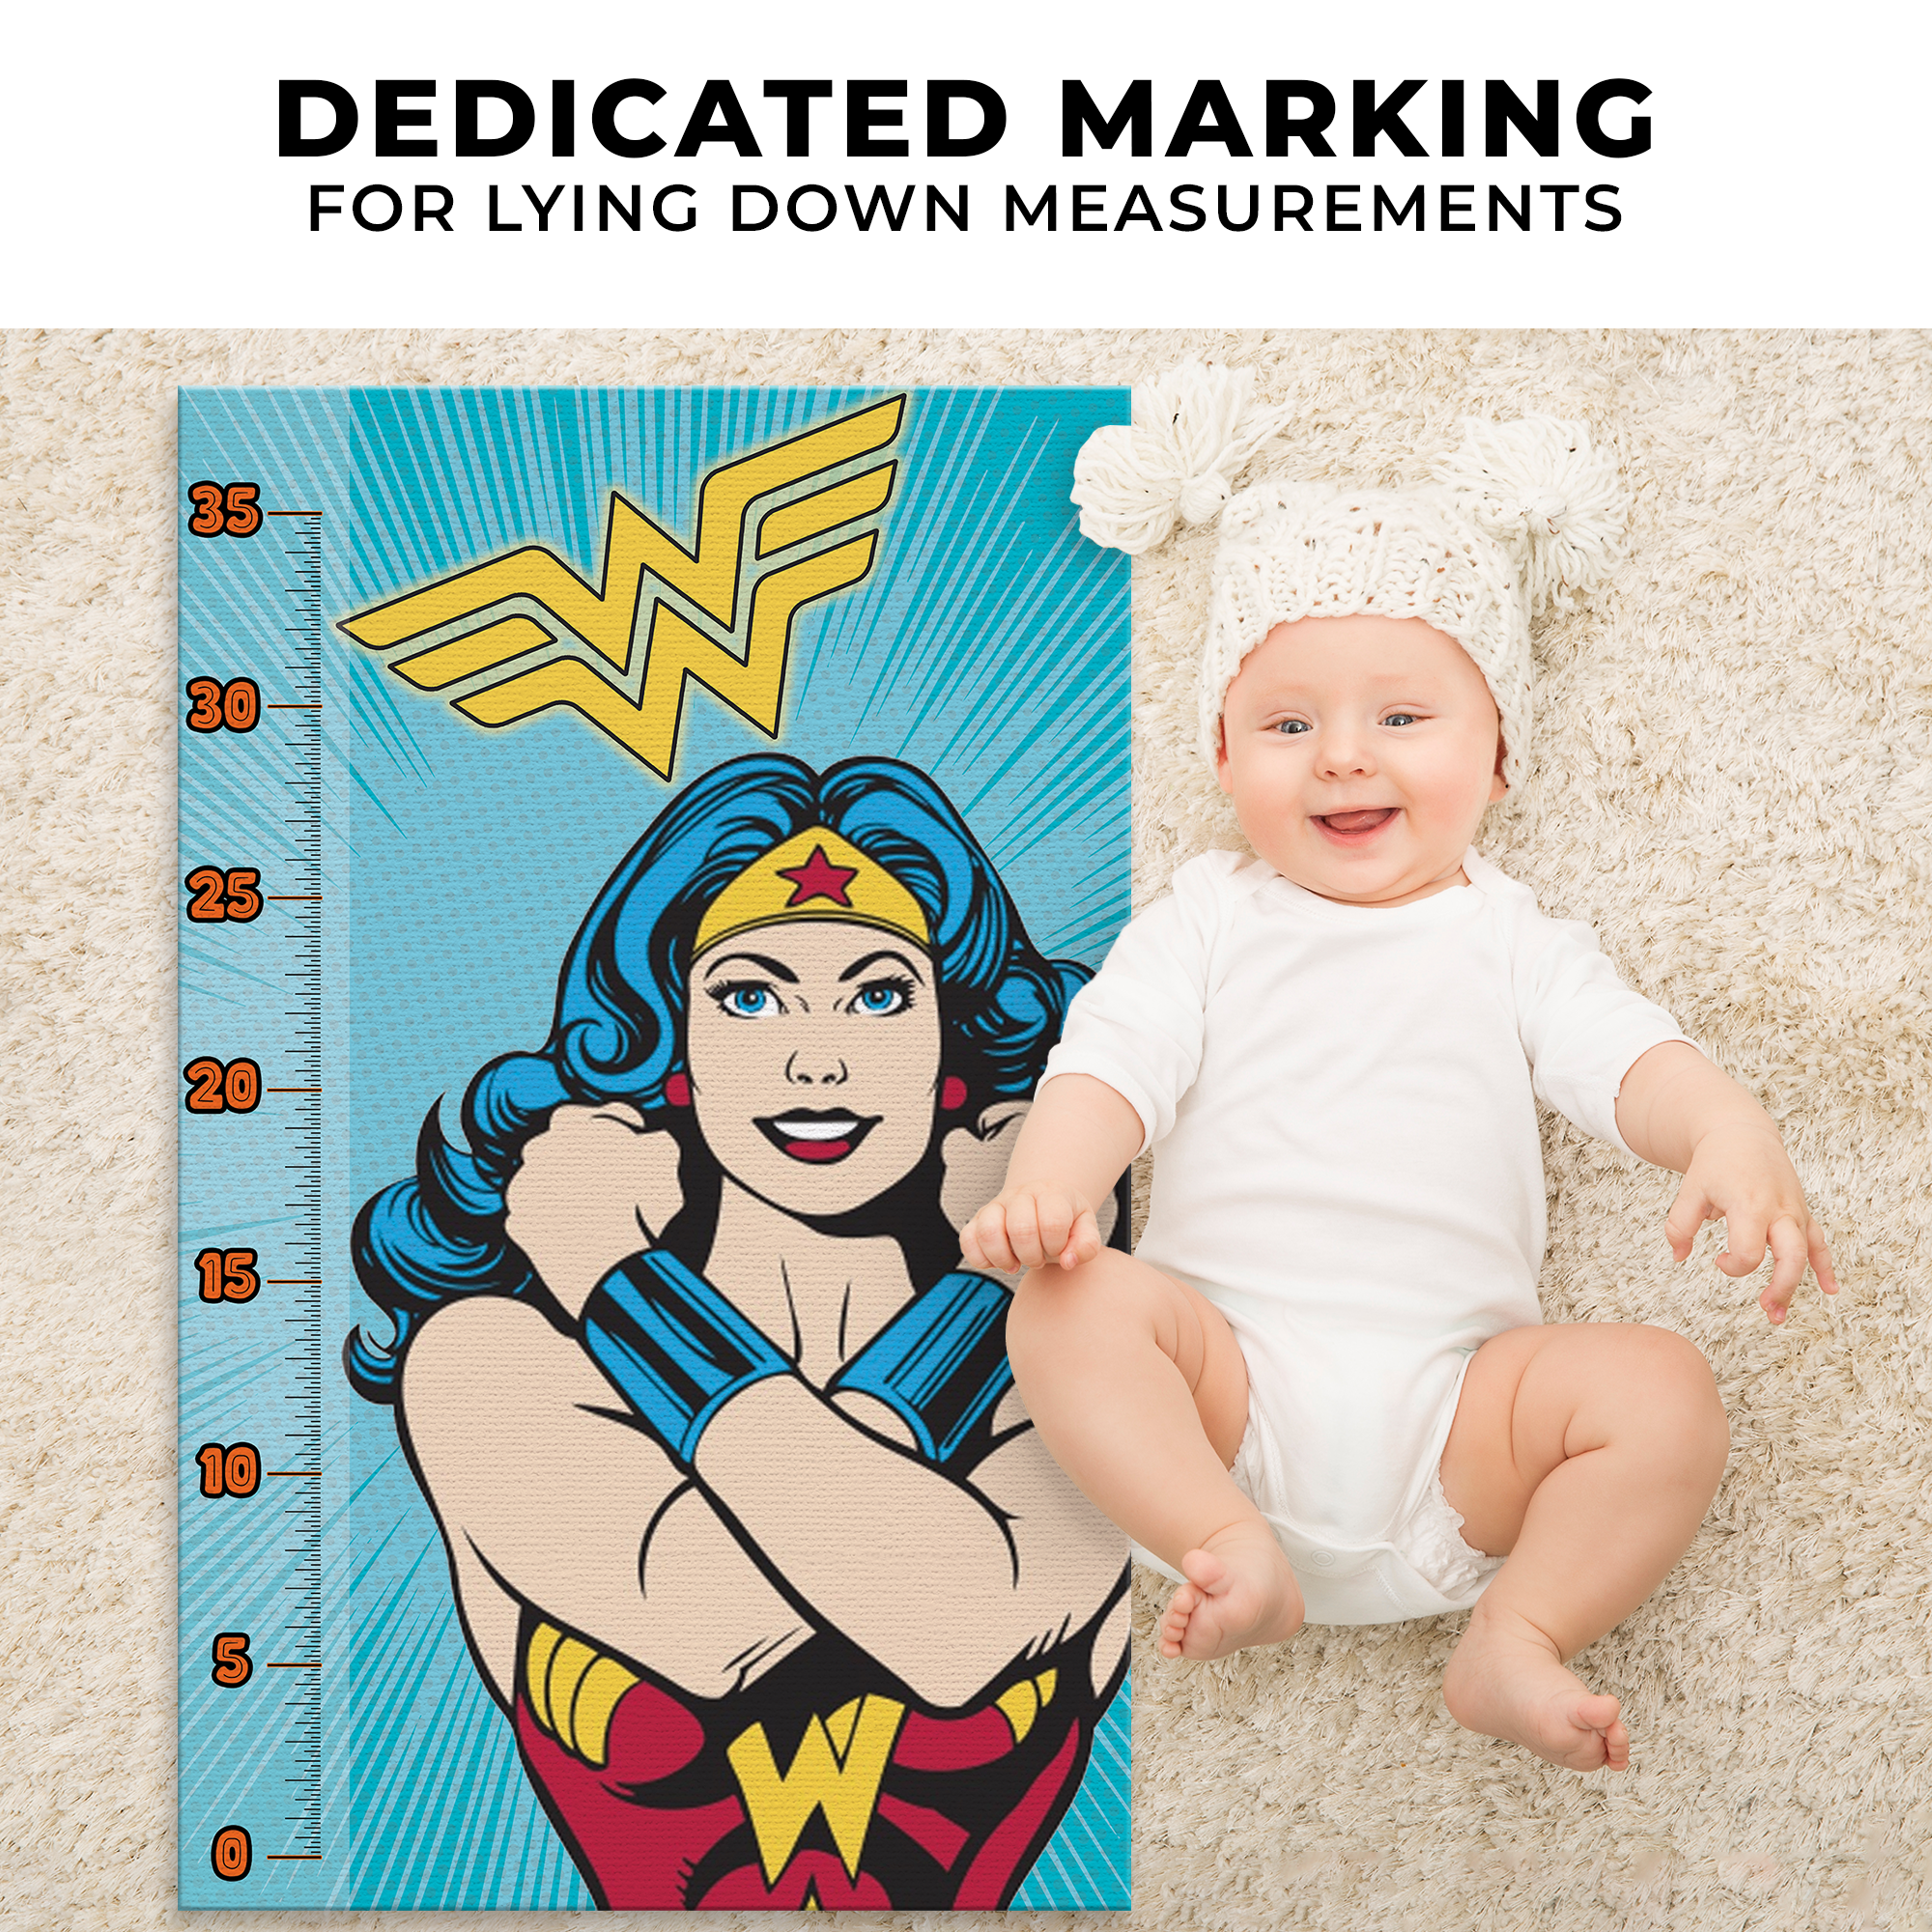 Wonder Woman Infant Growth Chart